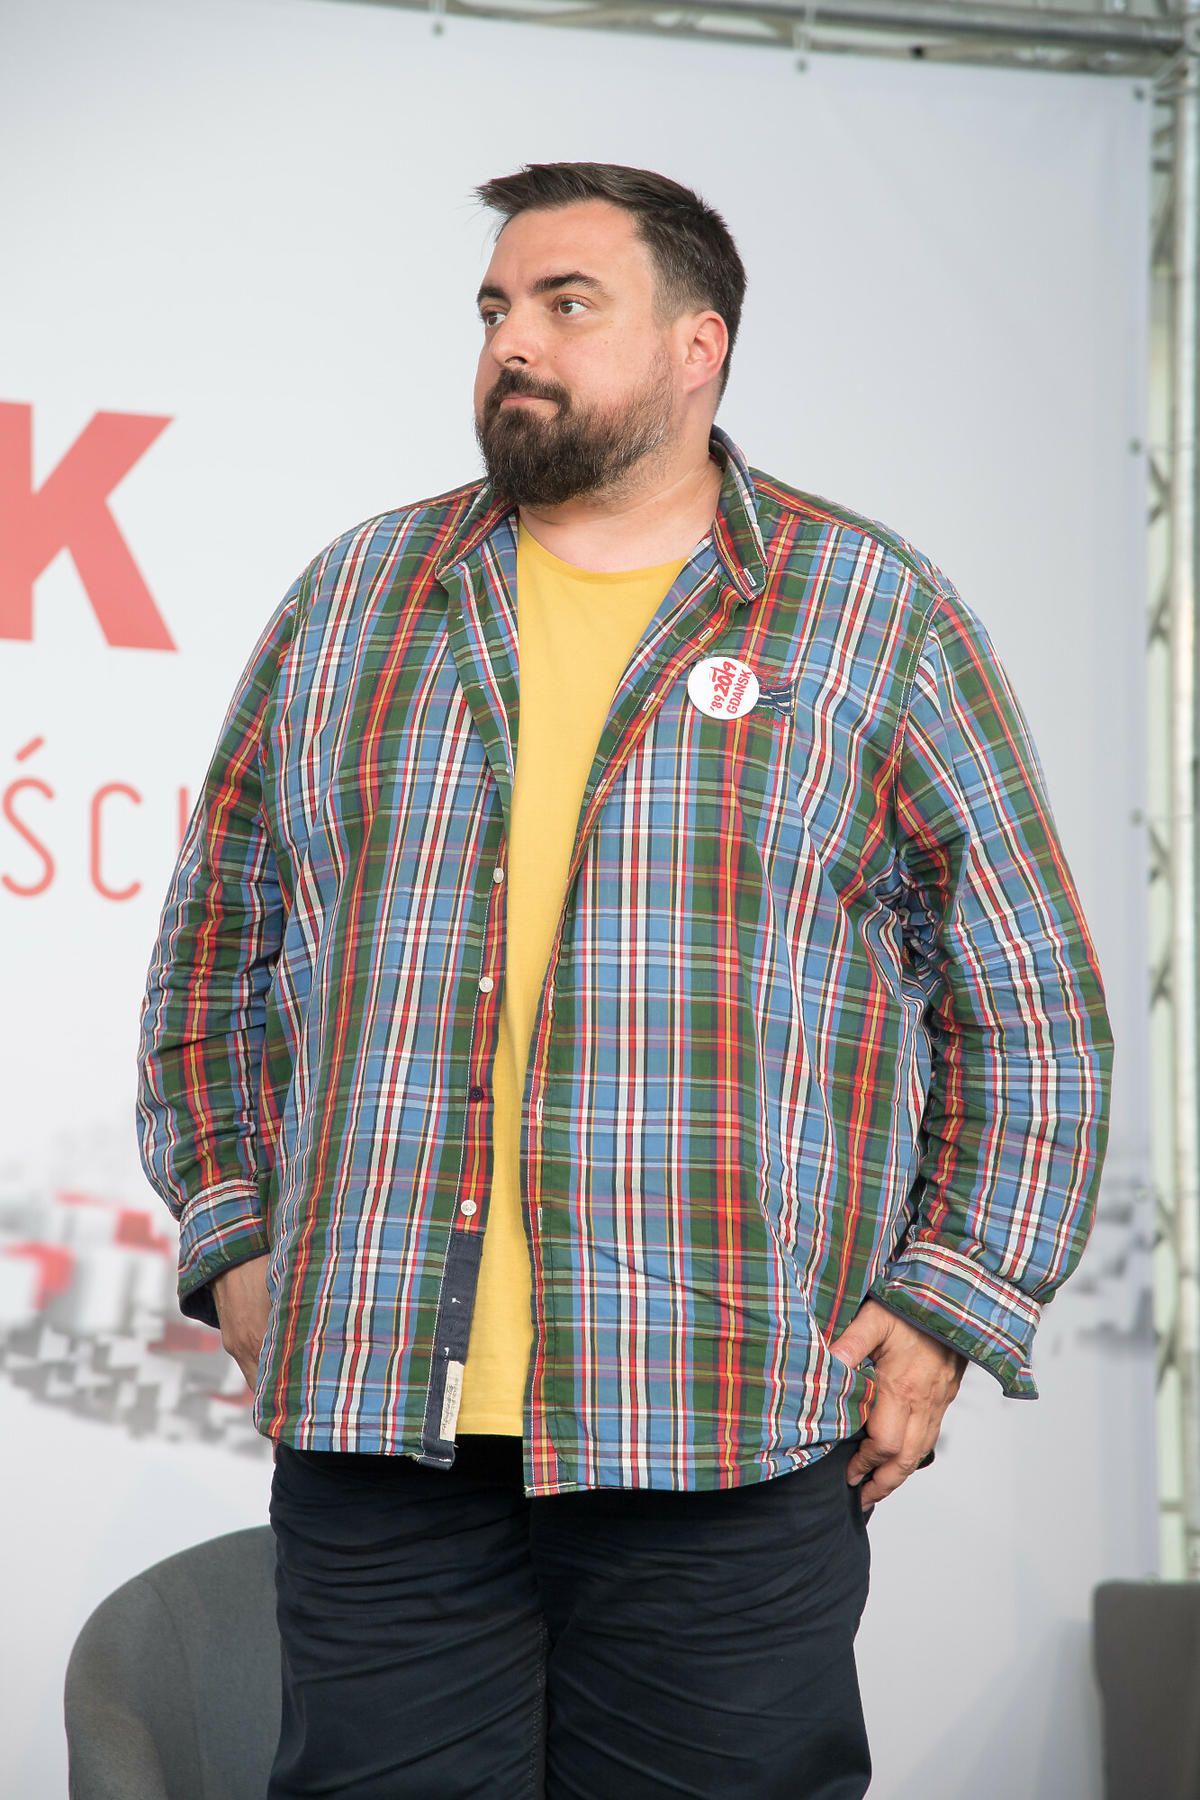 Tomasz Sekielski